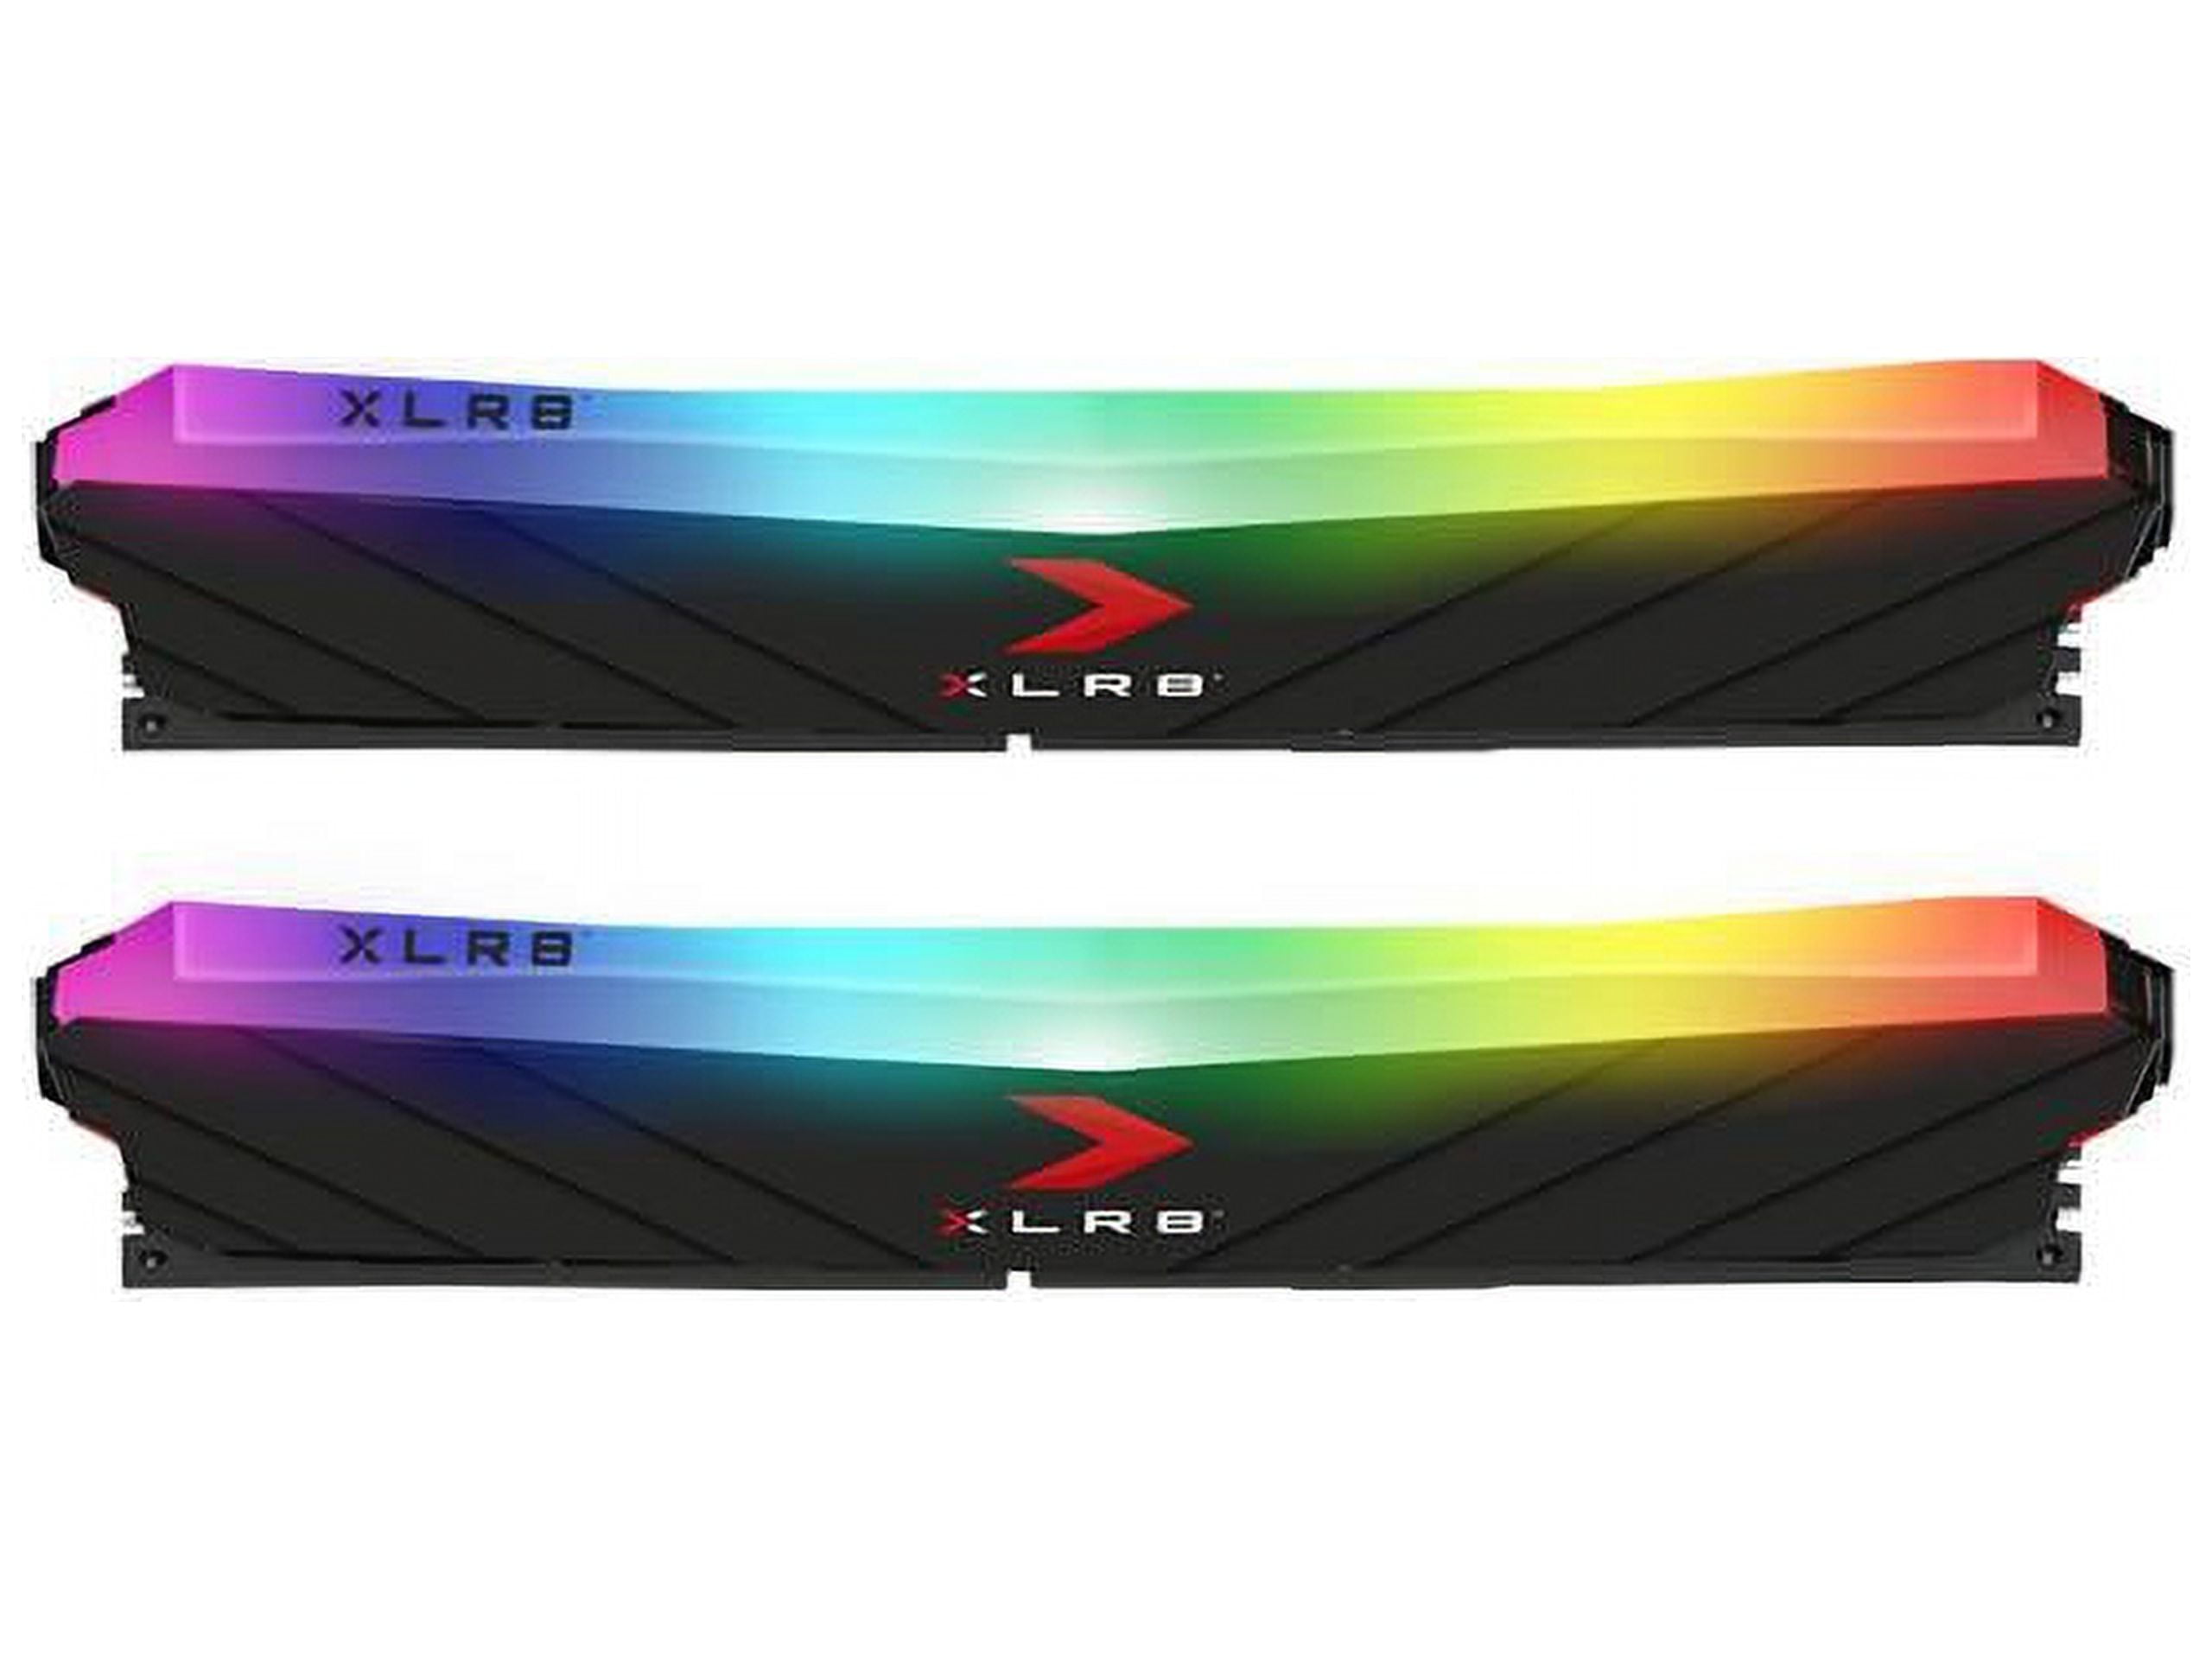 PNY XLR8 GAMING EPIC-X RGB 16Go (2x8Go) DDR4 3200MHz - Mémoire PC PNY sur